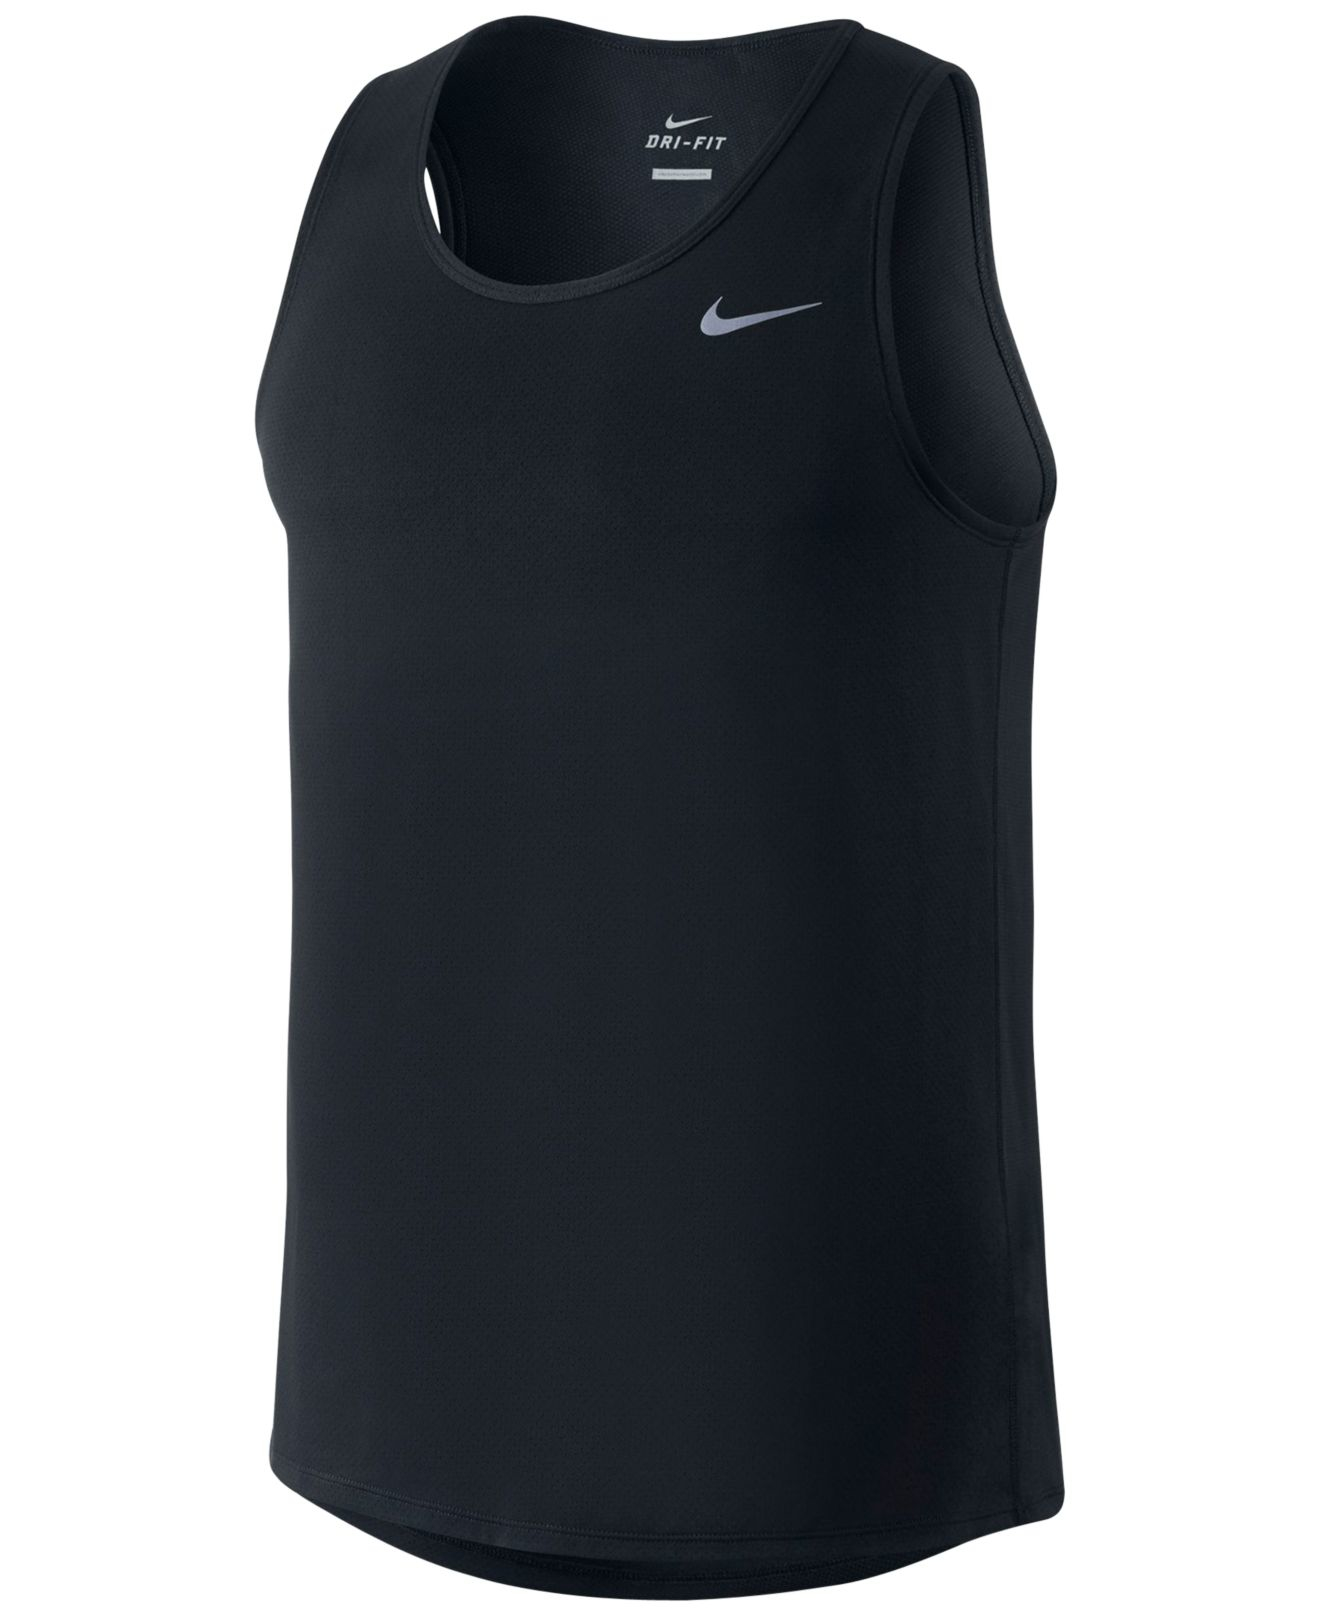 Lyst - Nike Contour Dri-fit Running Singlet in Black for Men